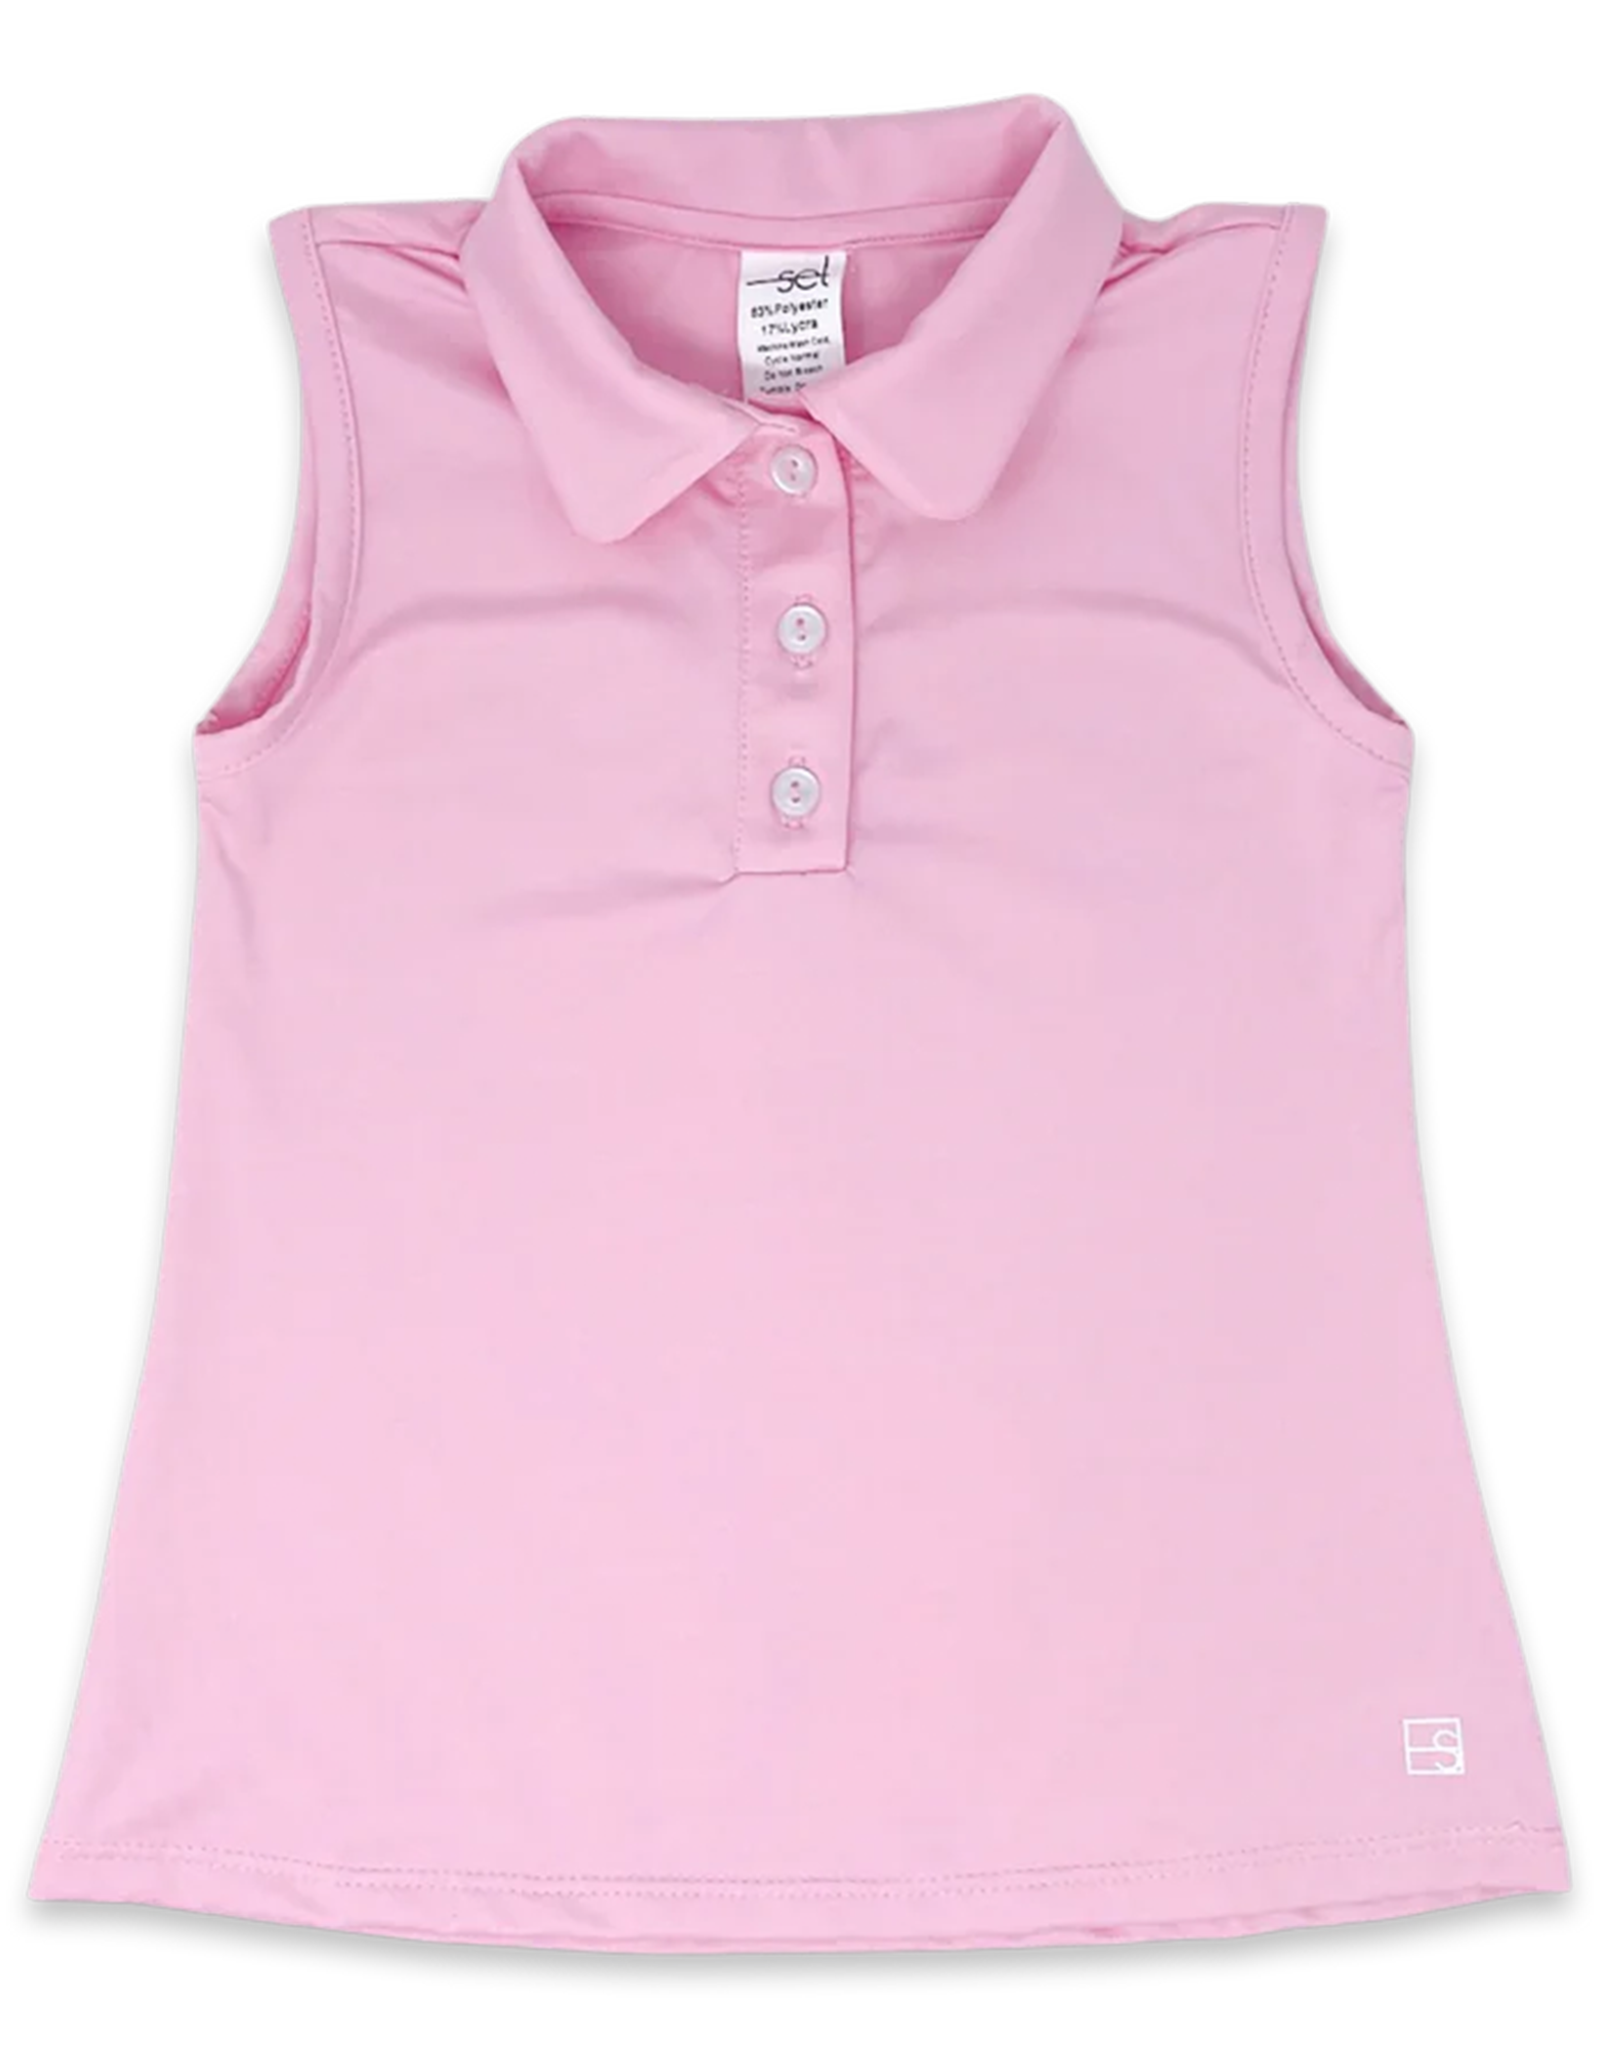 Set Athleisure Gabby Shirt Cotton Candy Pink